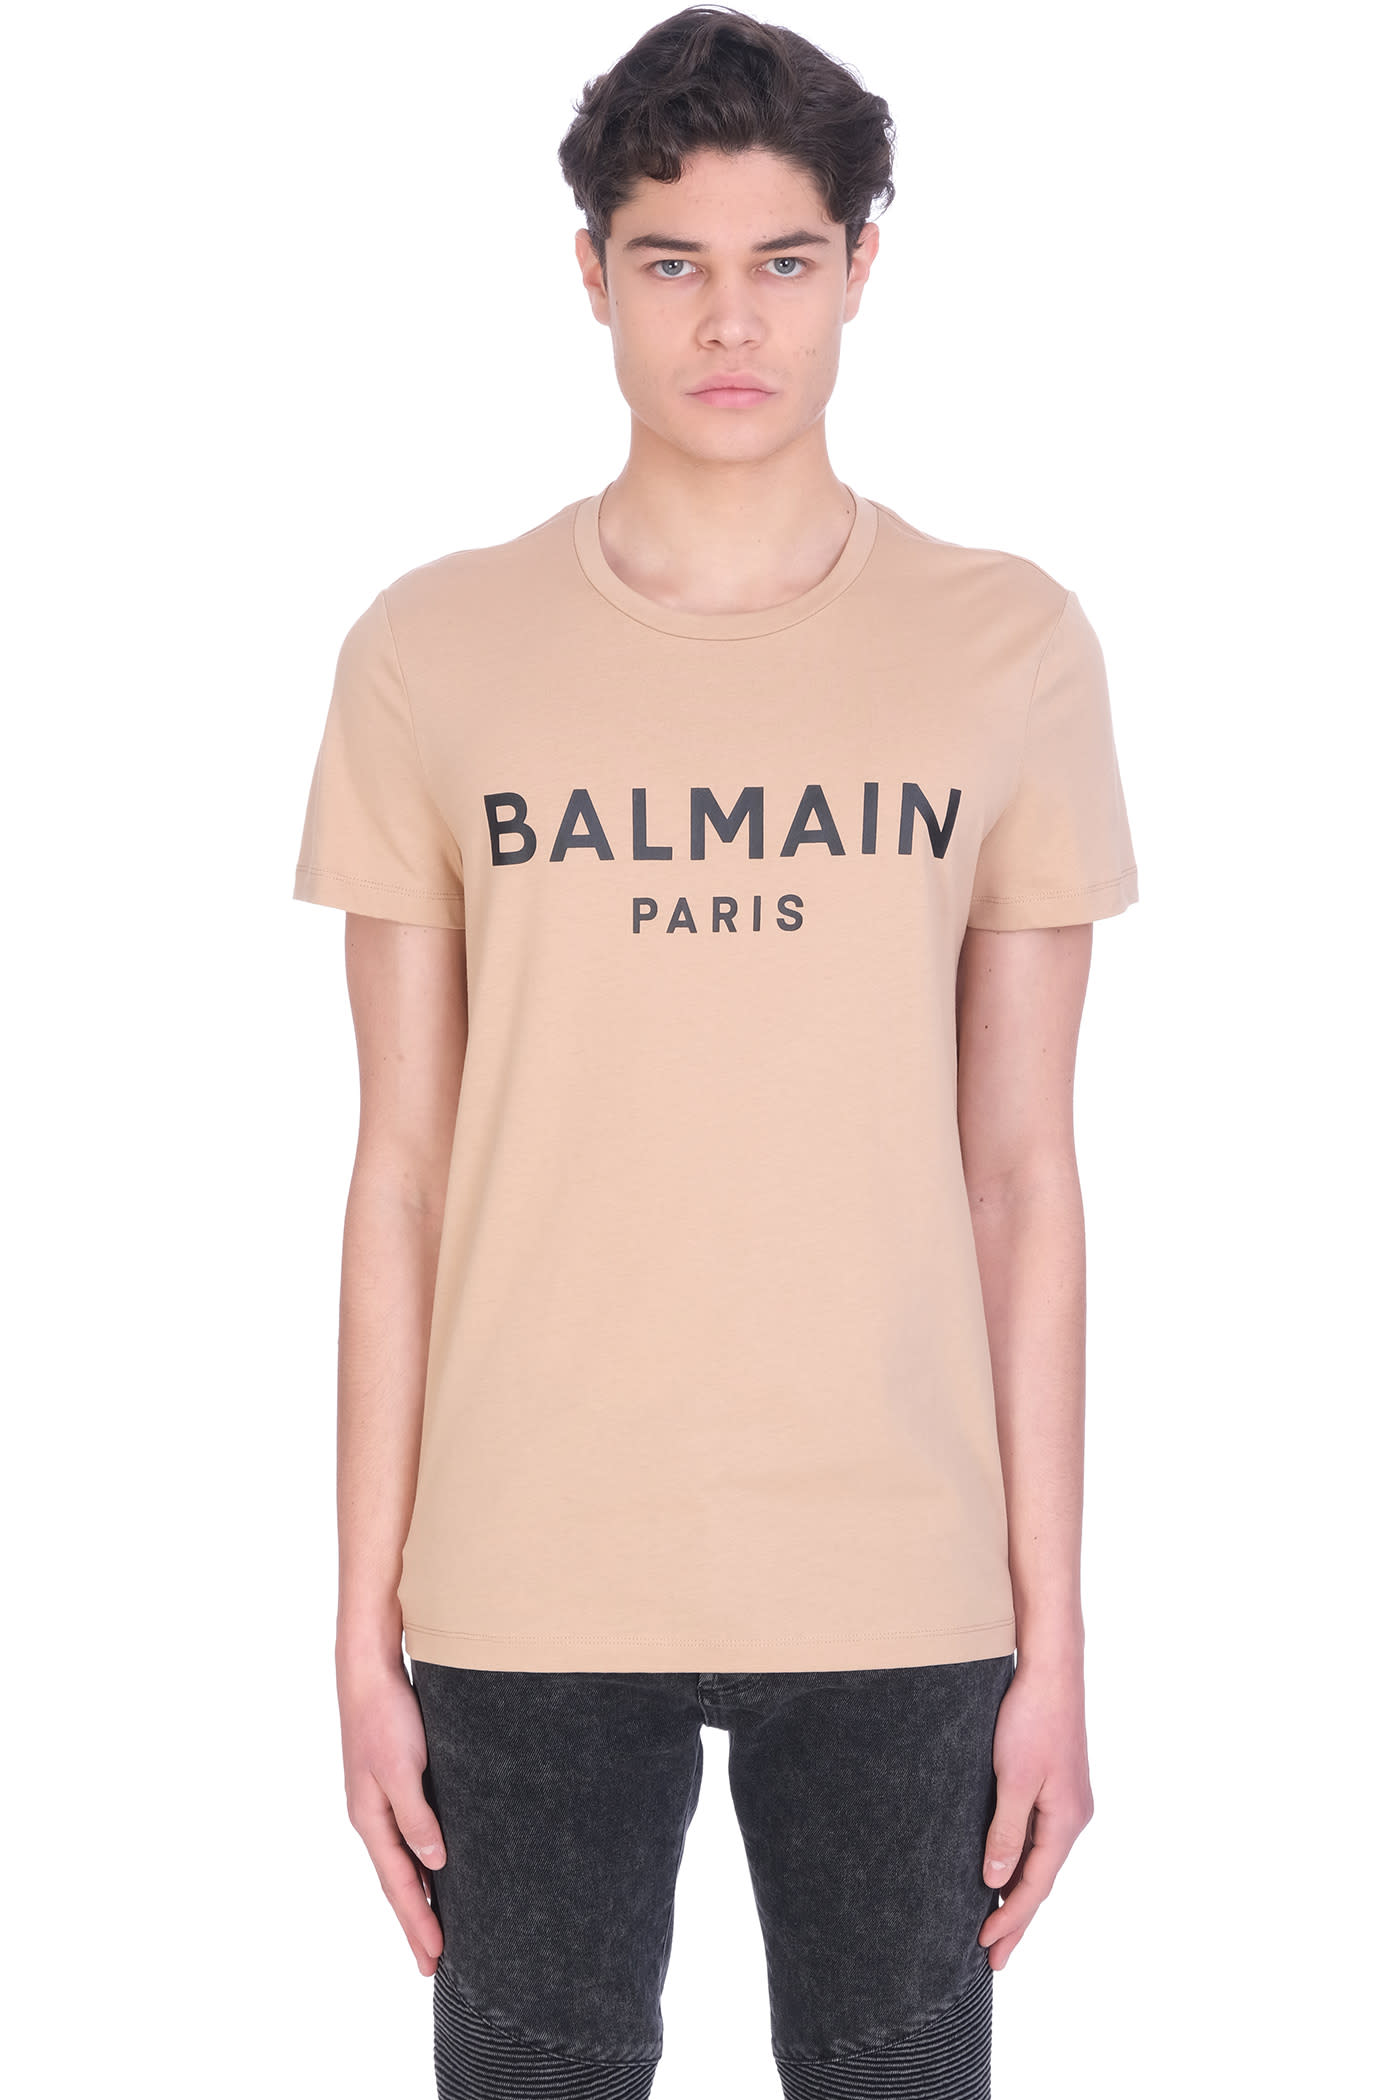 Balmain T-shirt In Powder Cotton